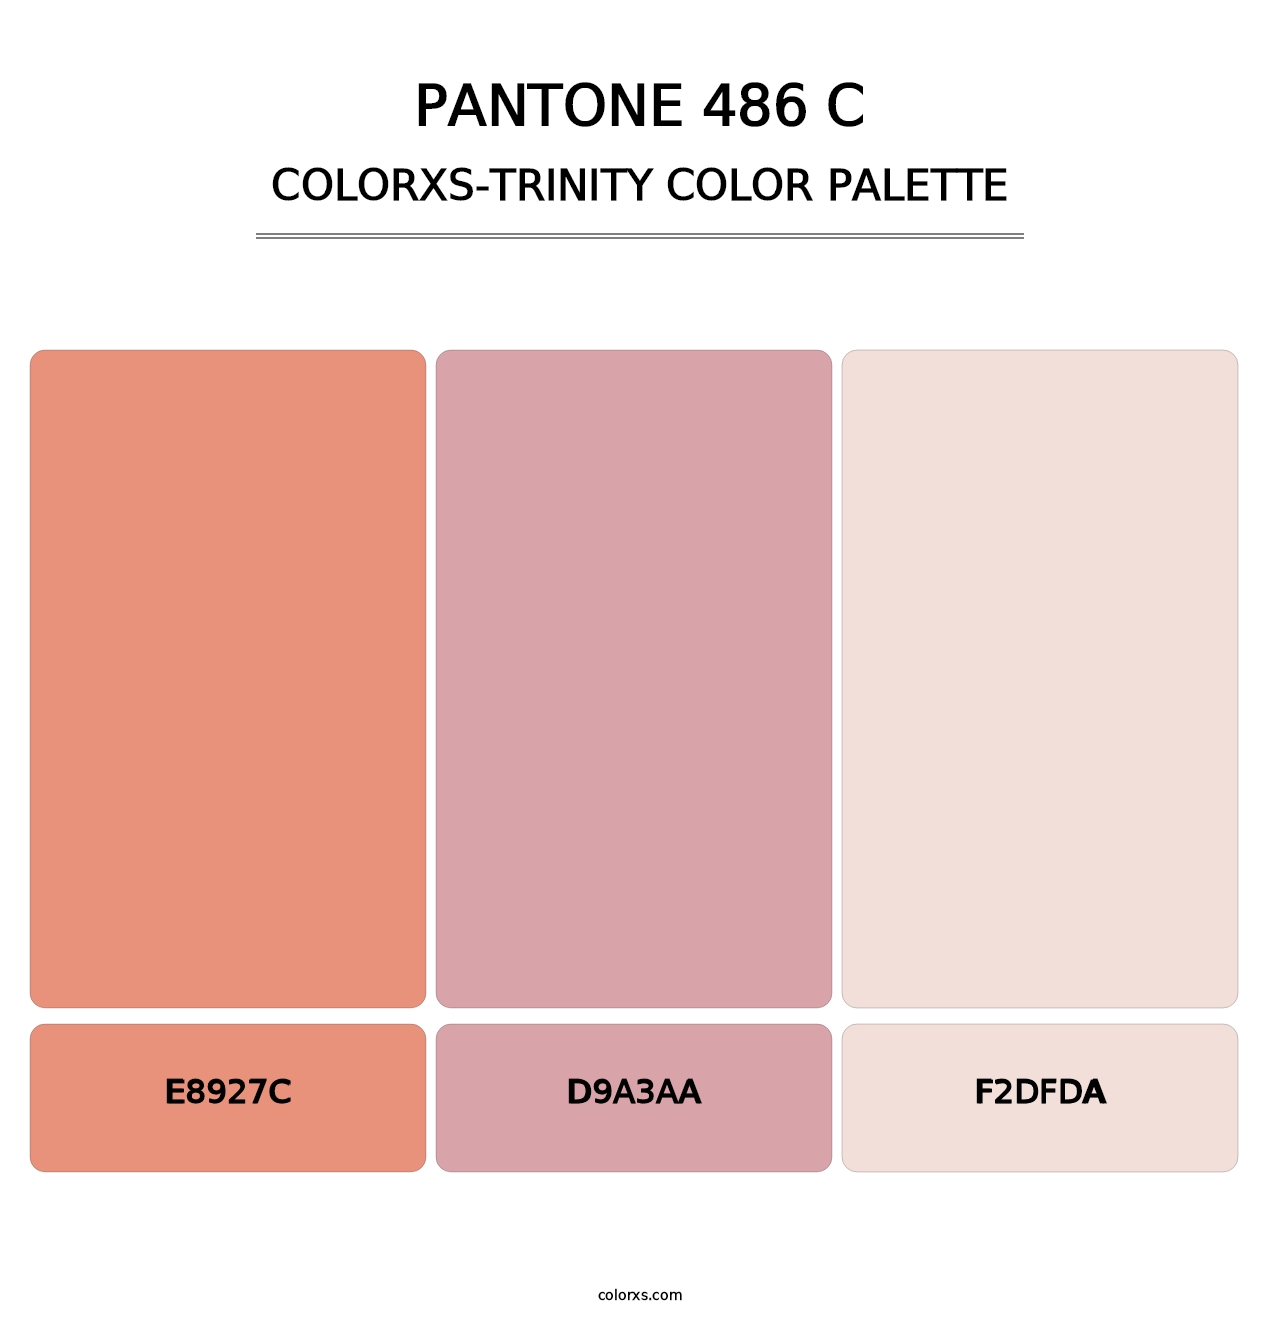 PANTONE 486 C - Colorxs Trinity Palette